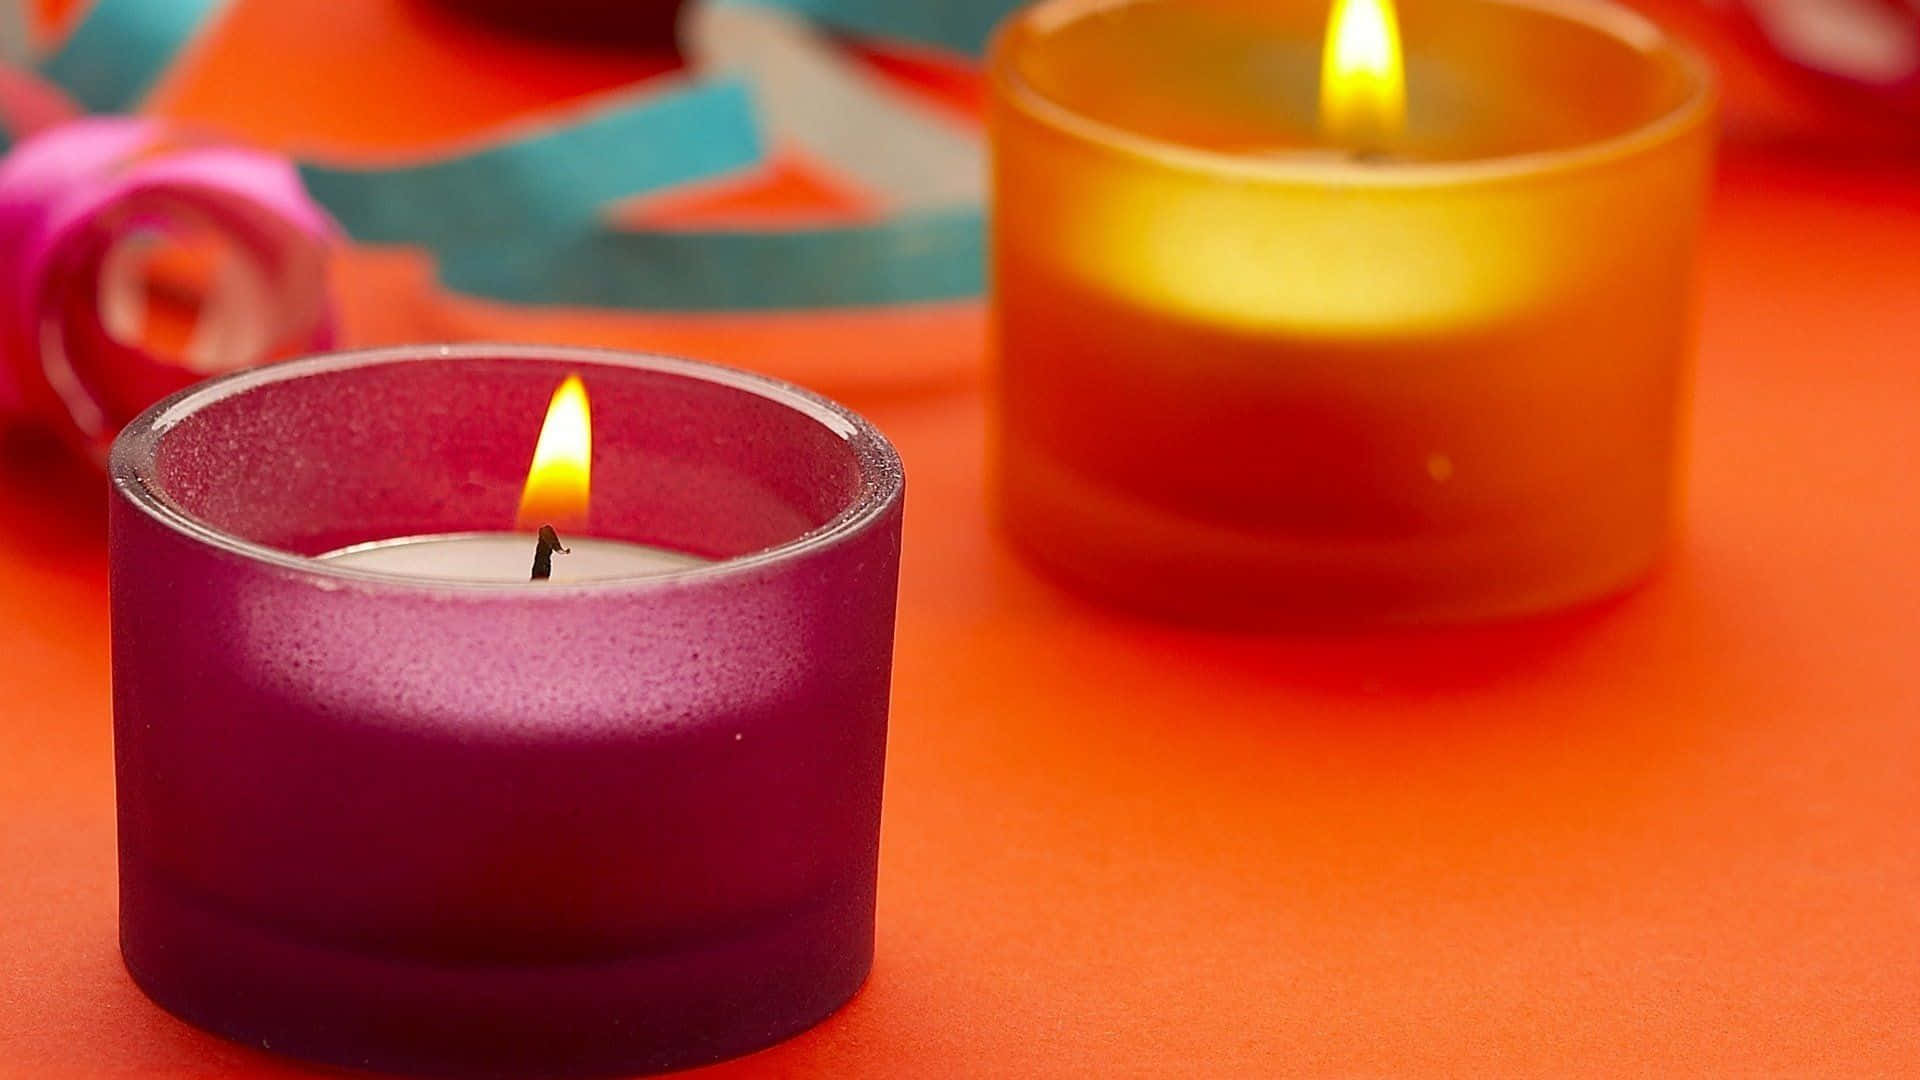 Tranquil Flame Meditation - A Candlelight Still Life Wallpaper